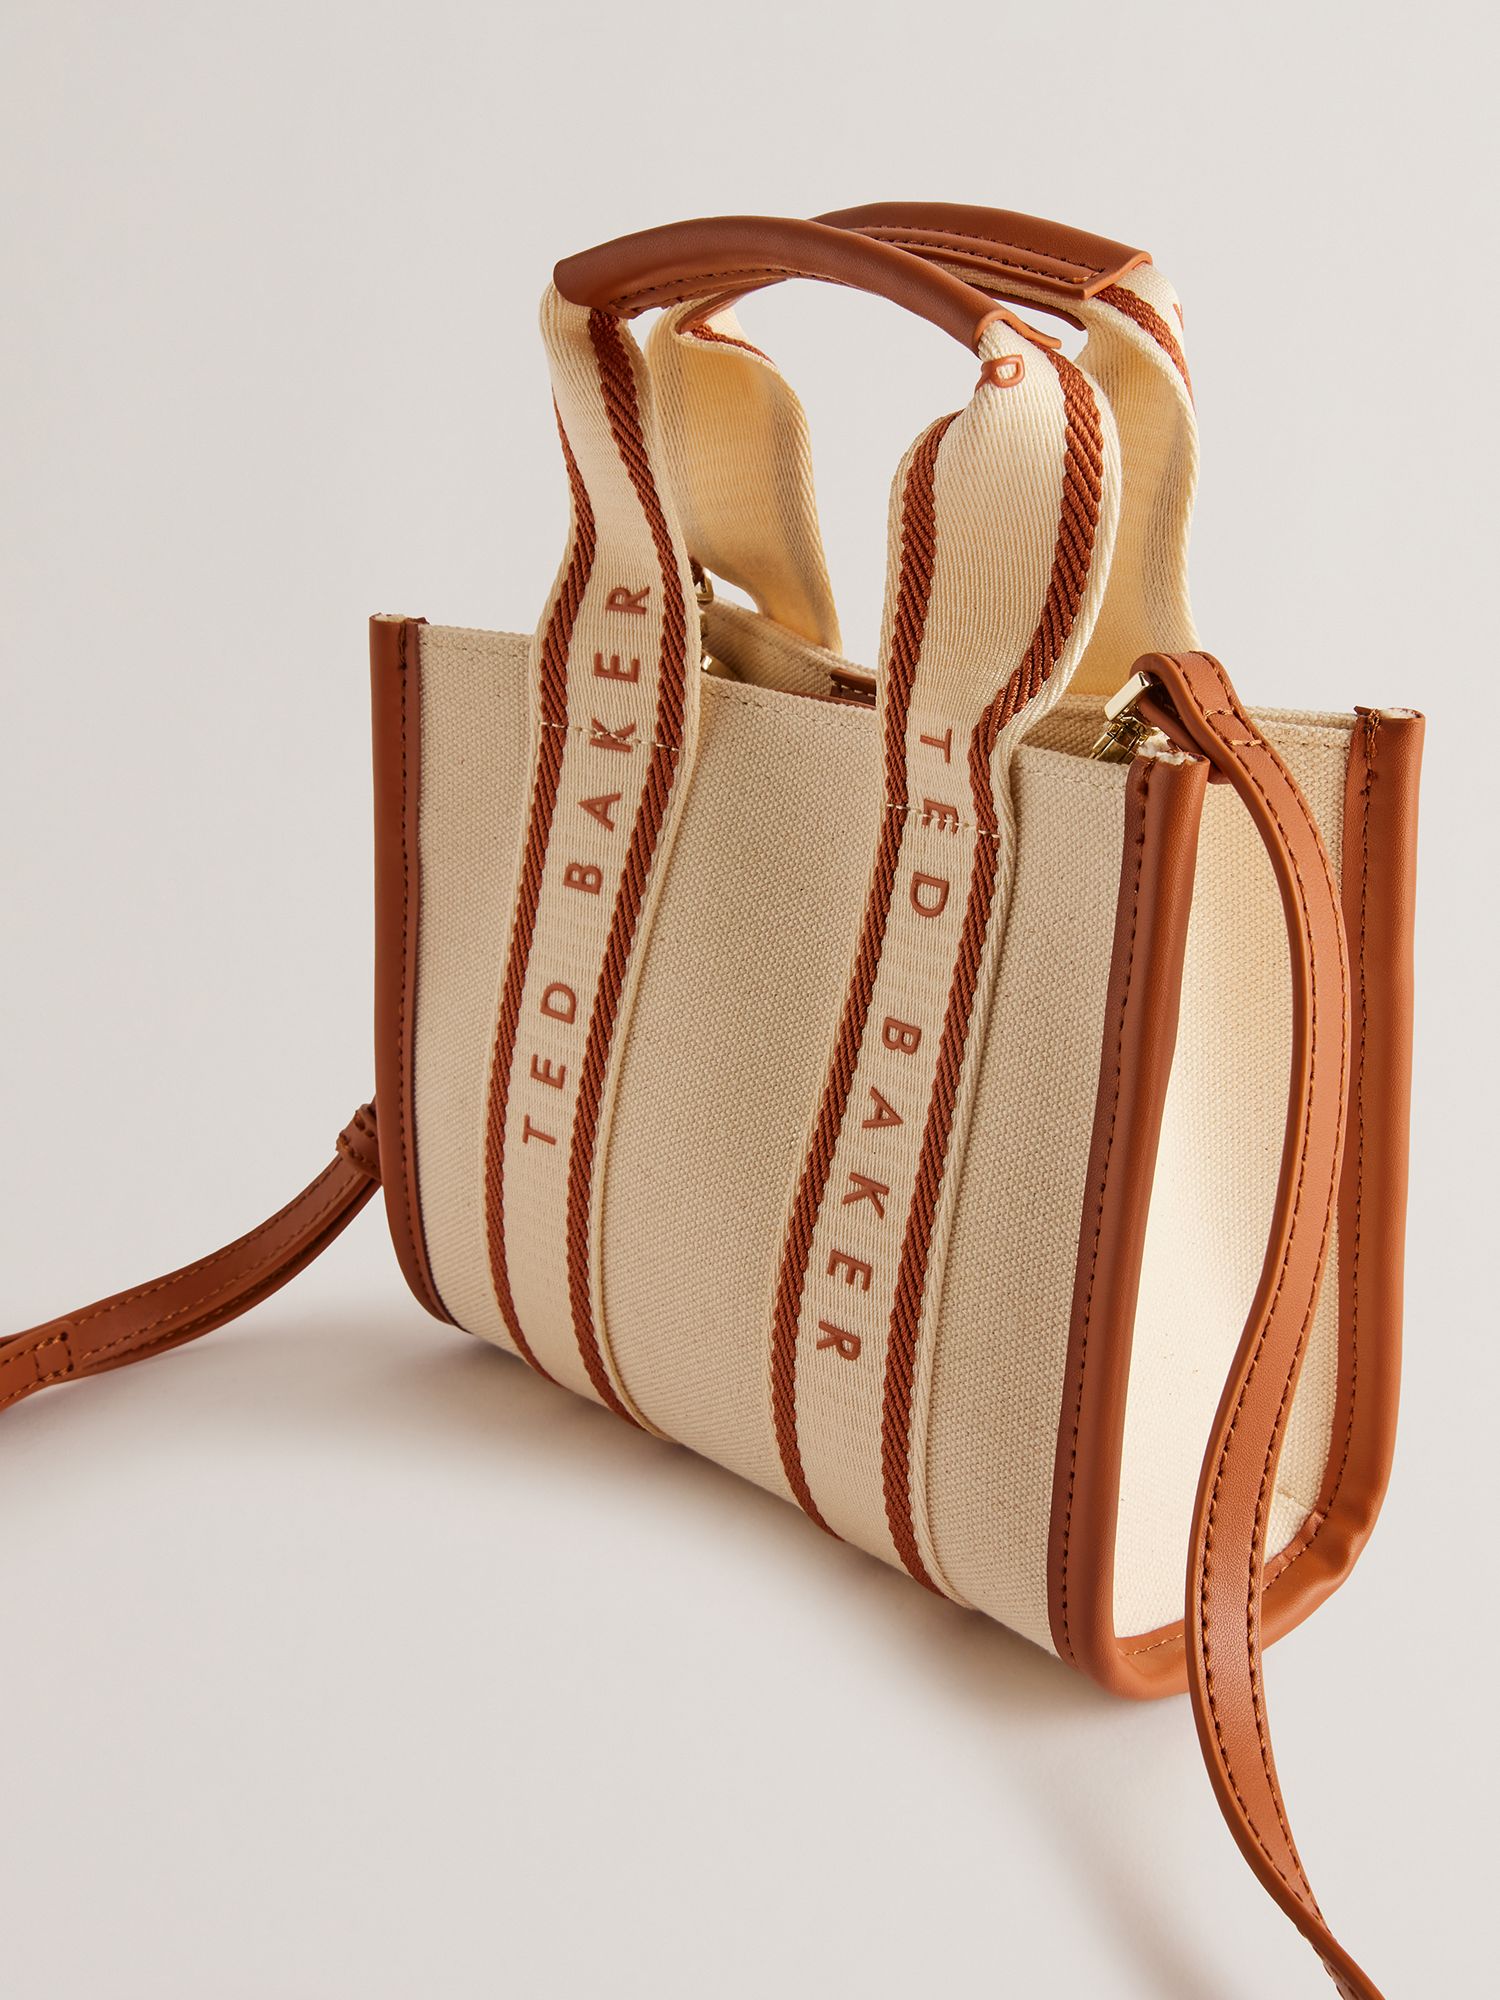 Ted Baker Georjiy Branded Webbing Canvas Mini Tote Bag, Cream/Tan, One Size